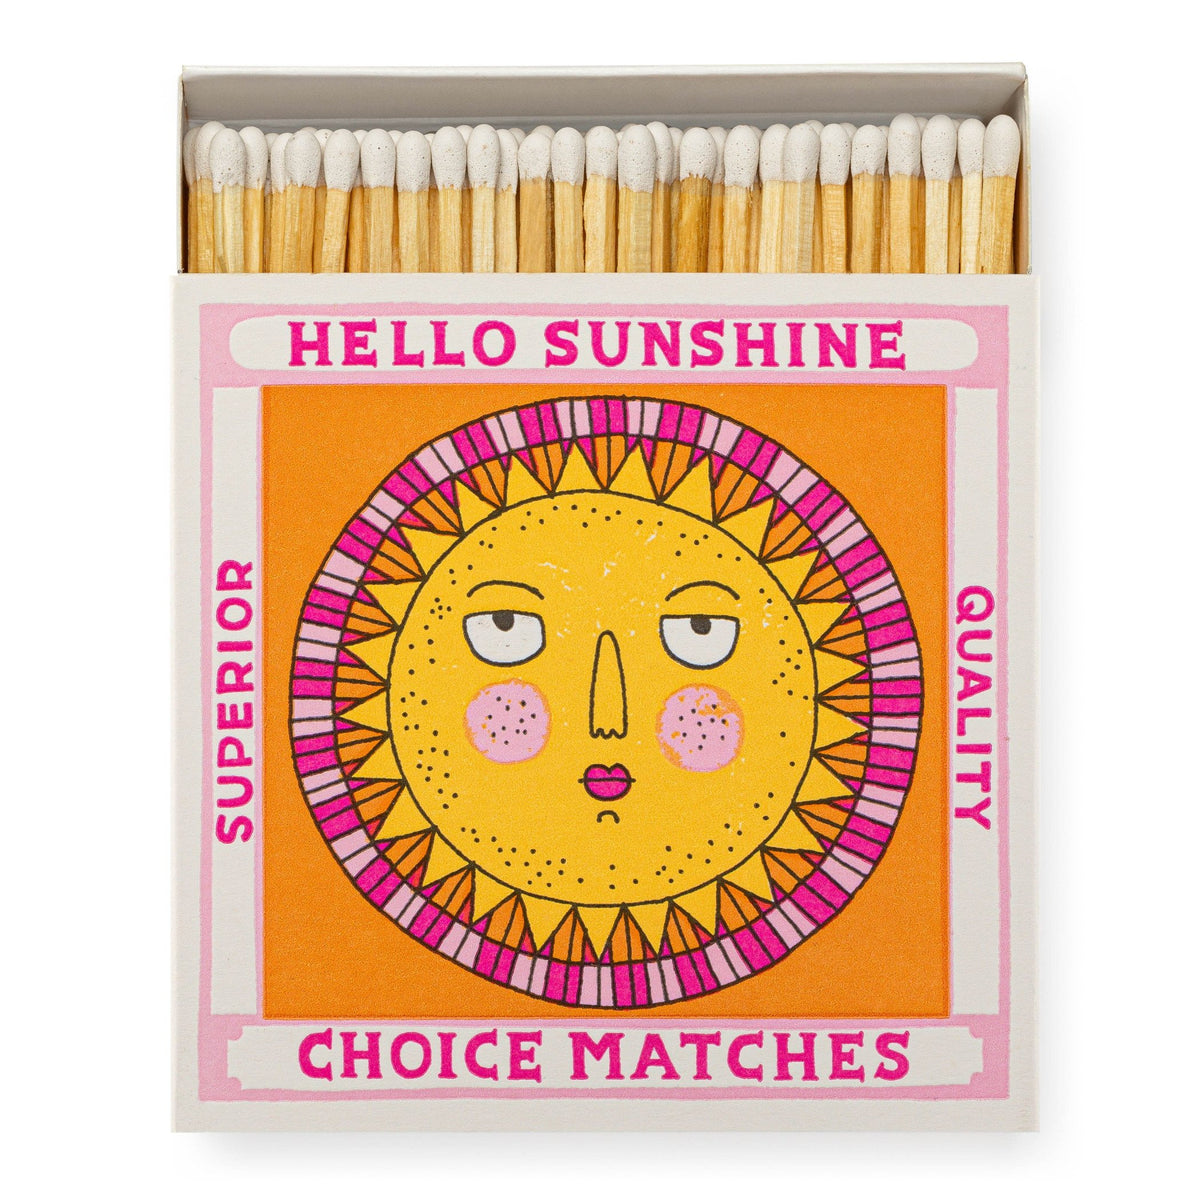 Sunshine Matches